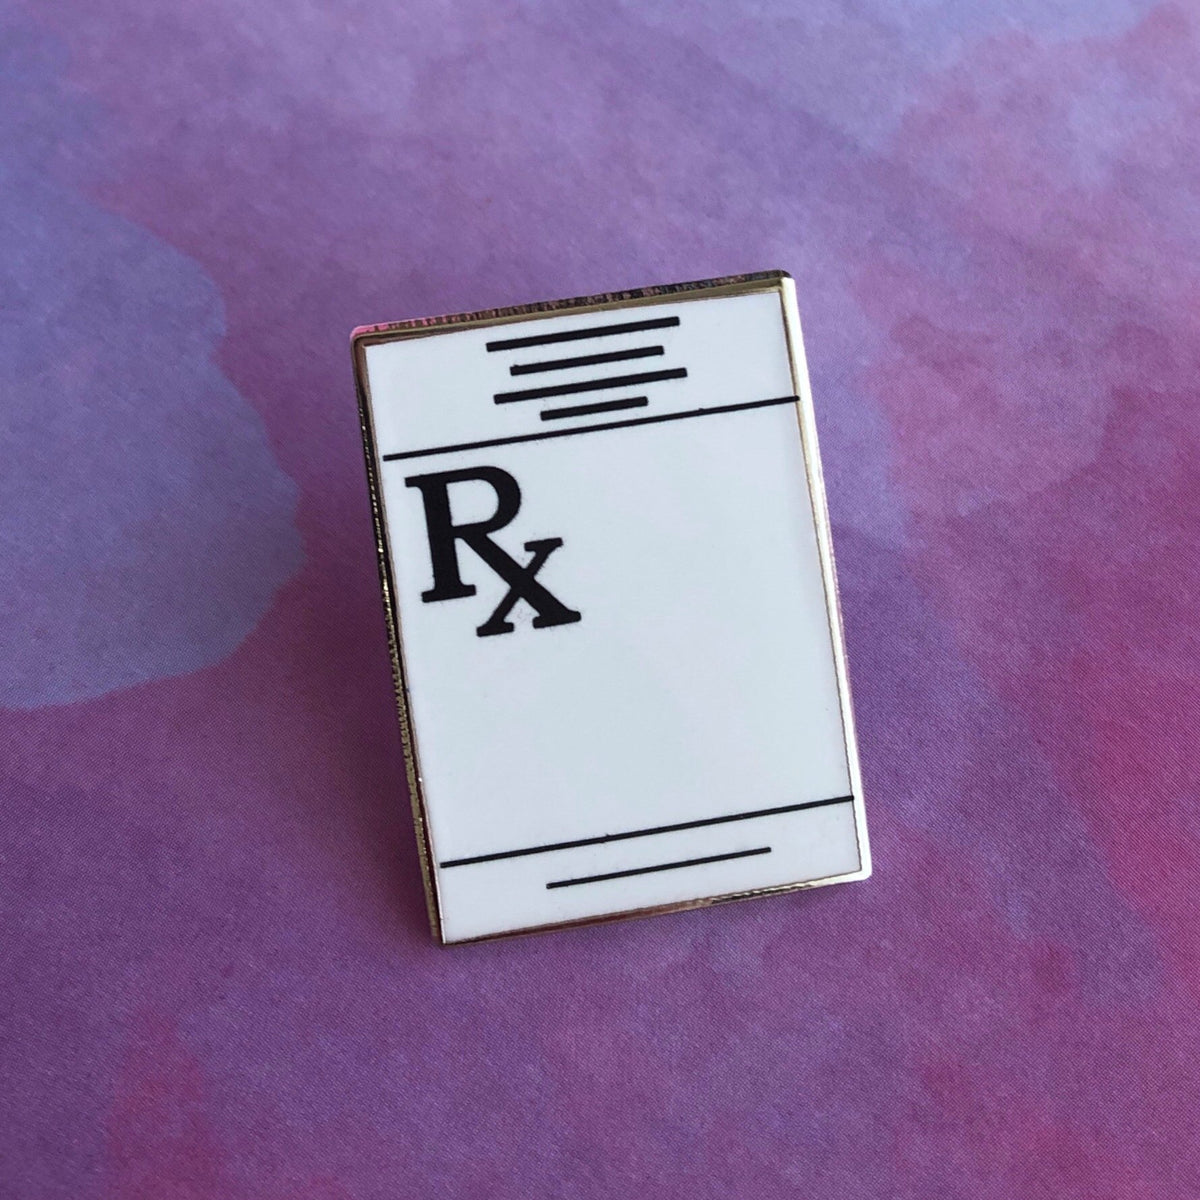 Pharmacy Pin Pack - Rad Girl Creations